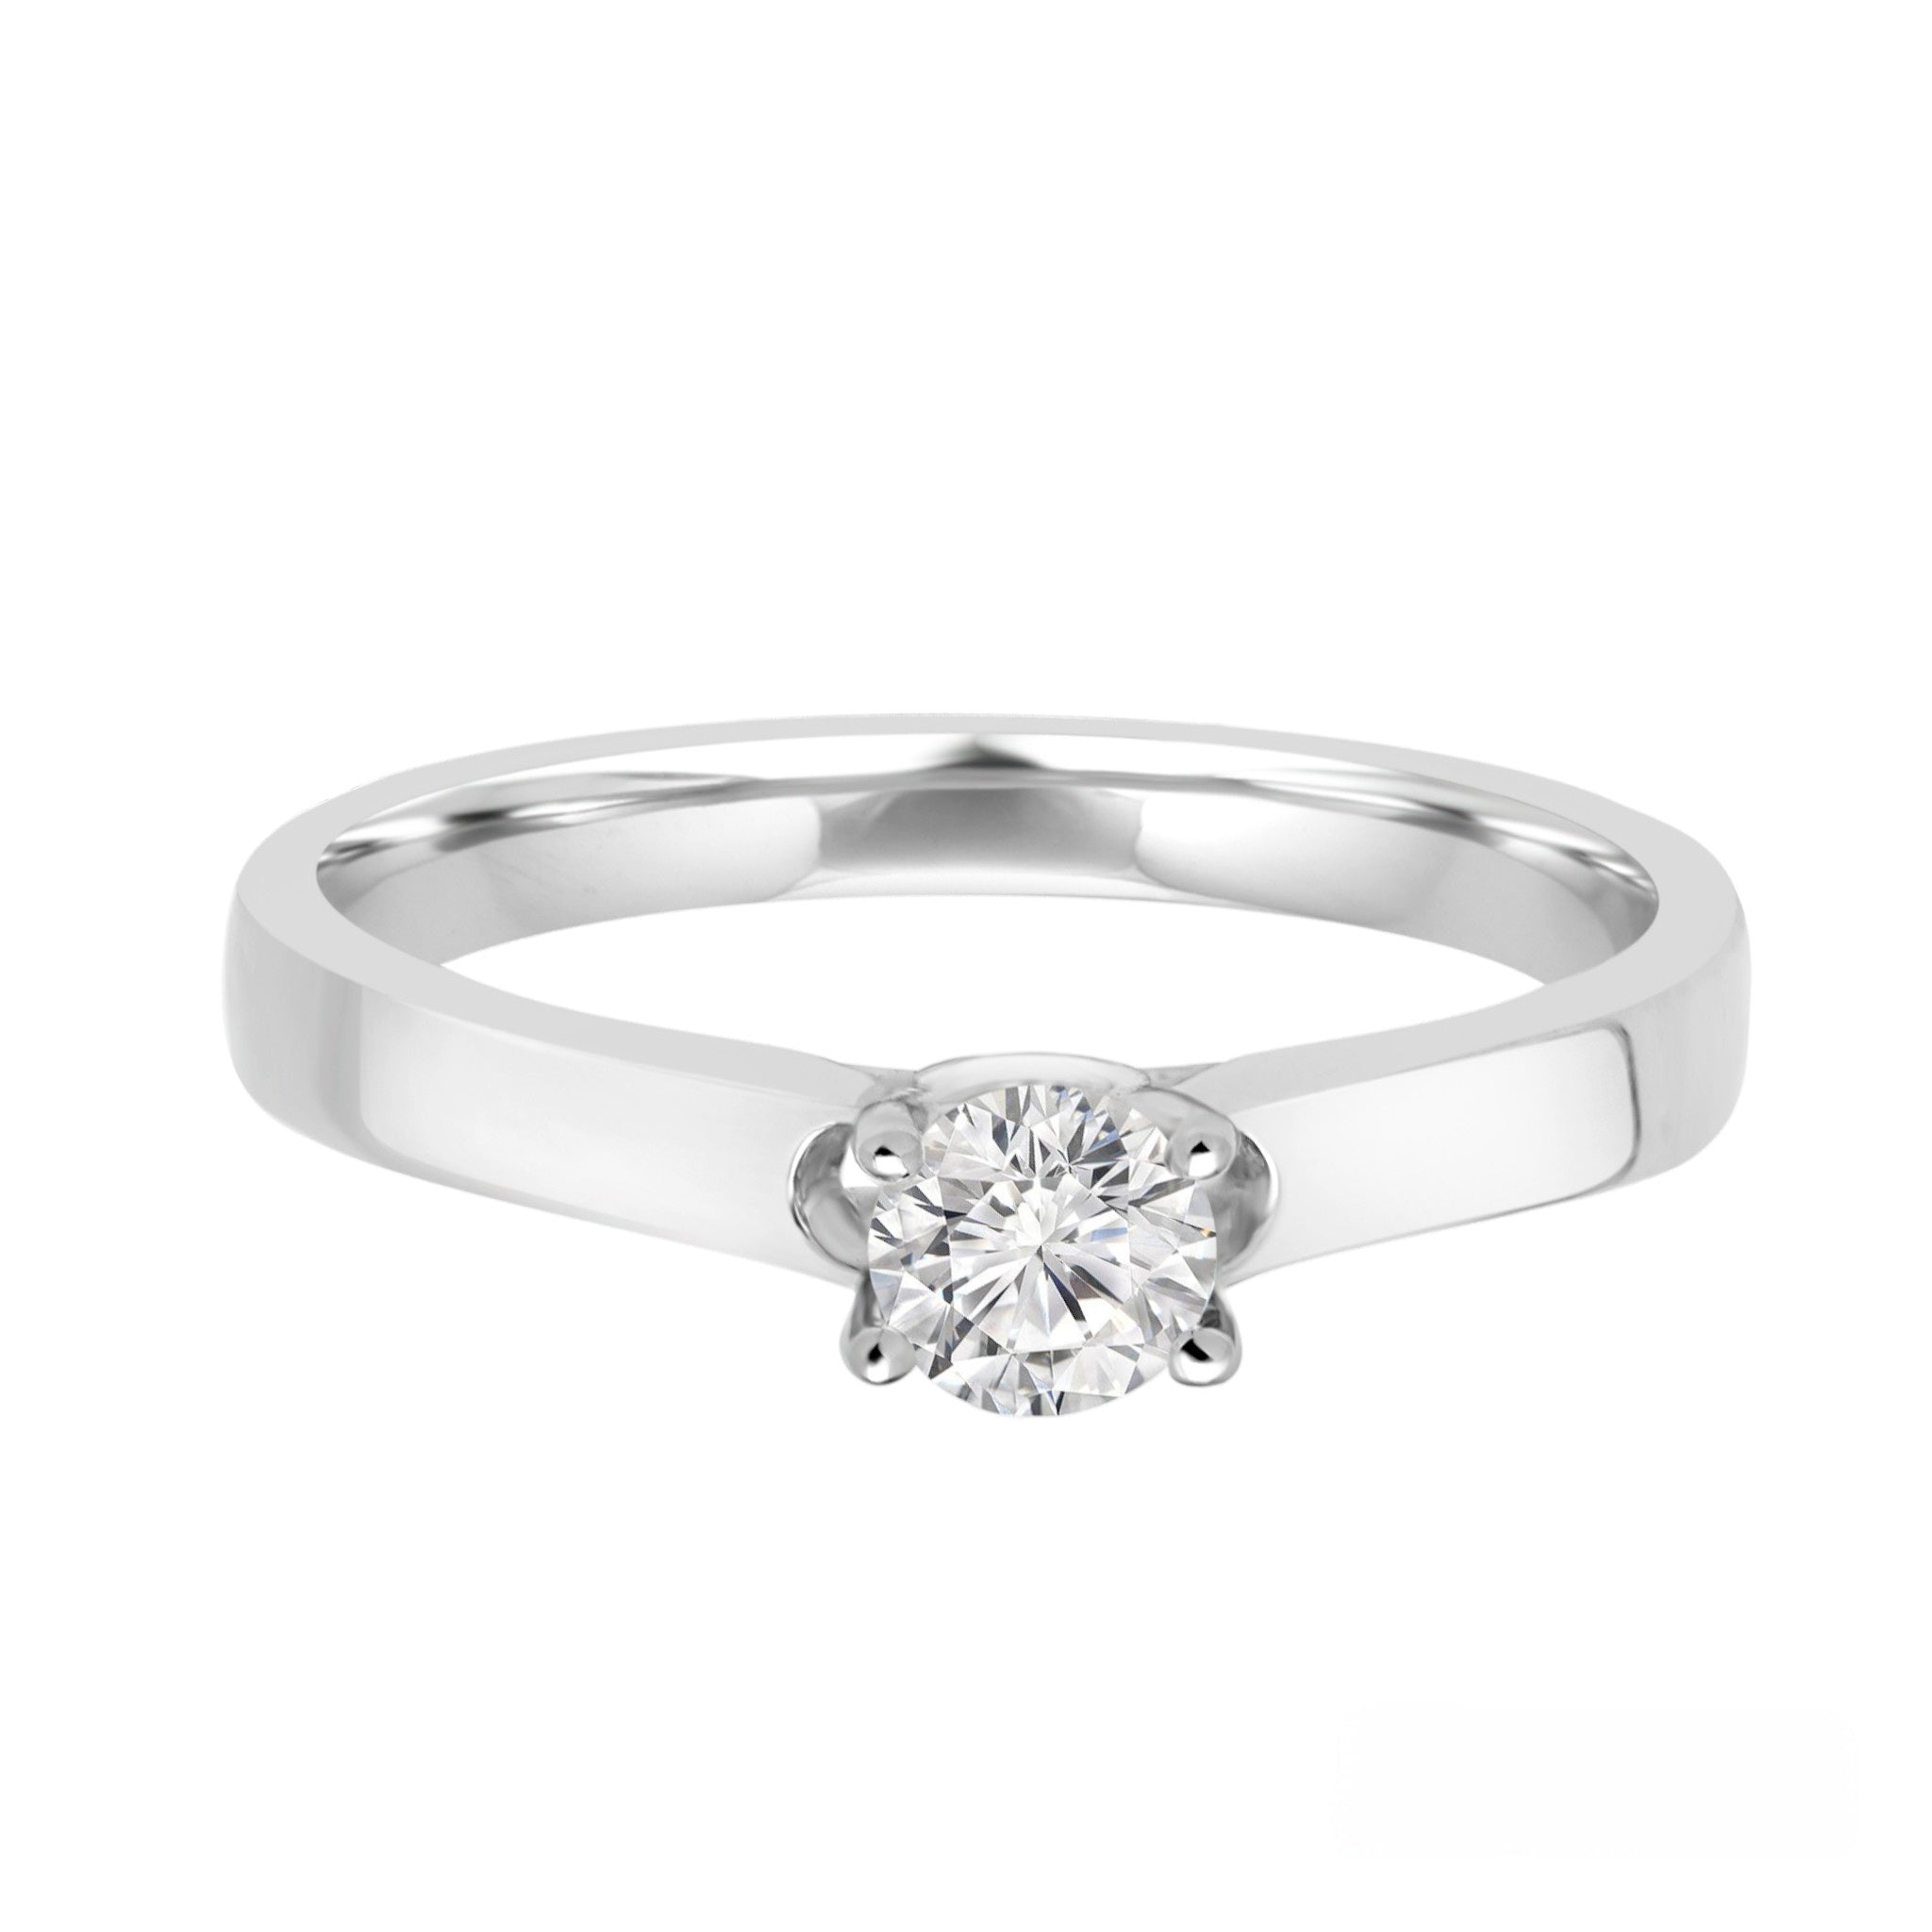 Round solitaire 0.3 carat diamond engagement ring 14k white gold